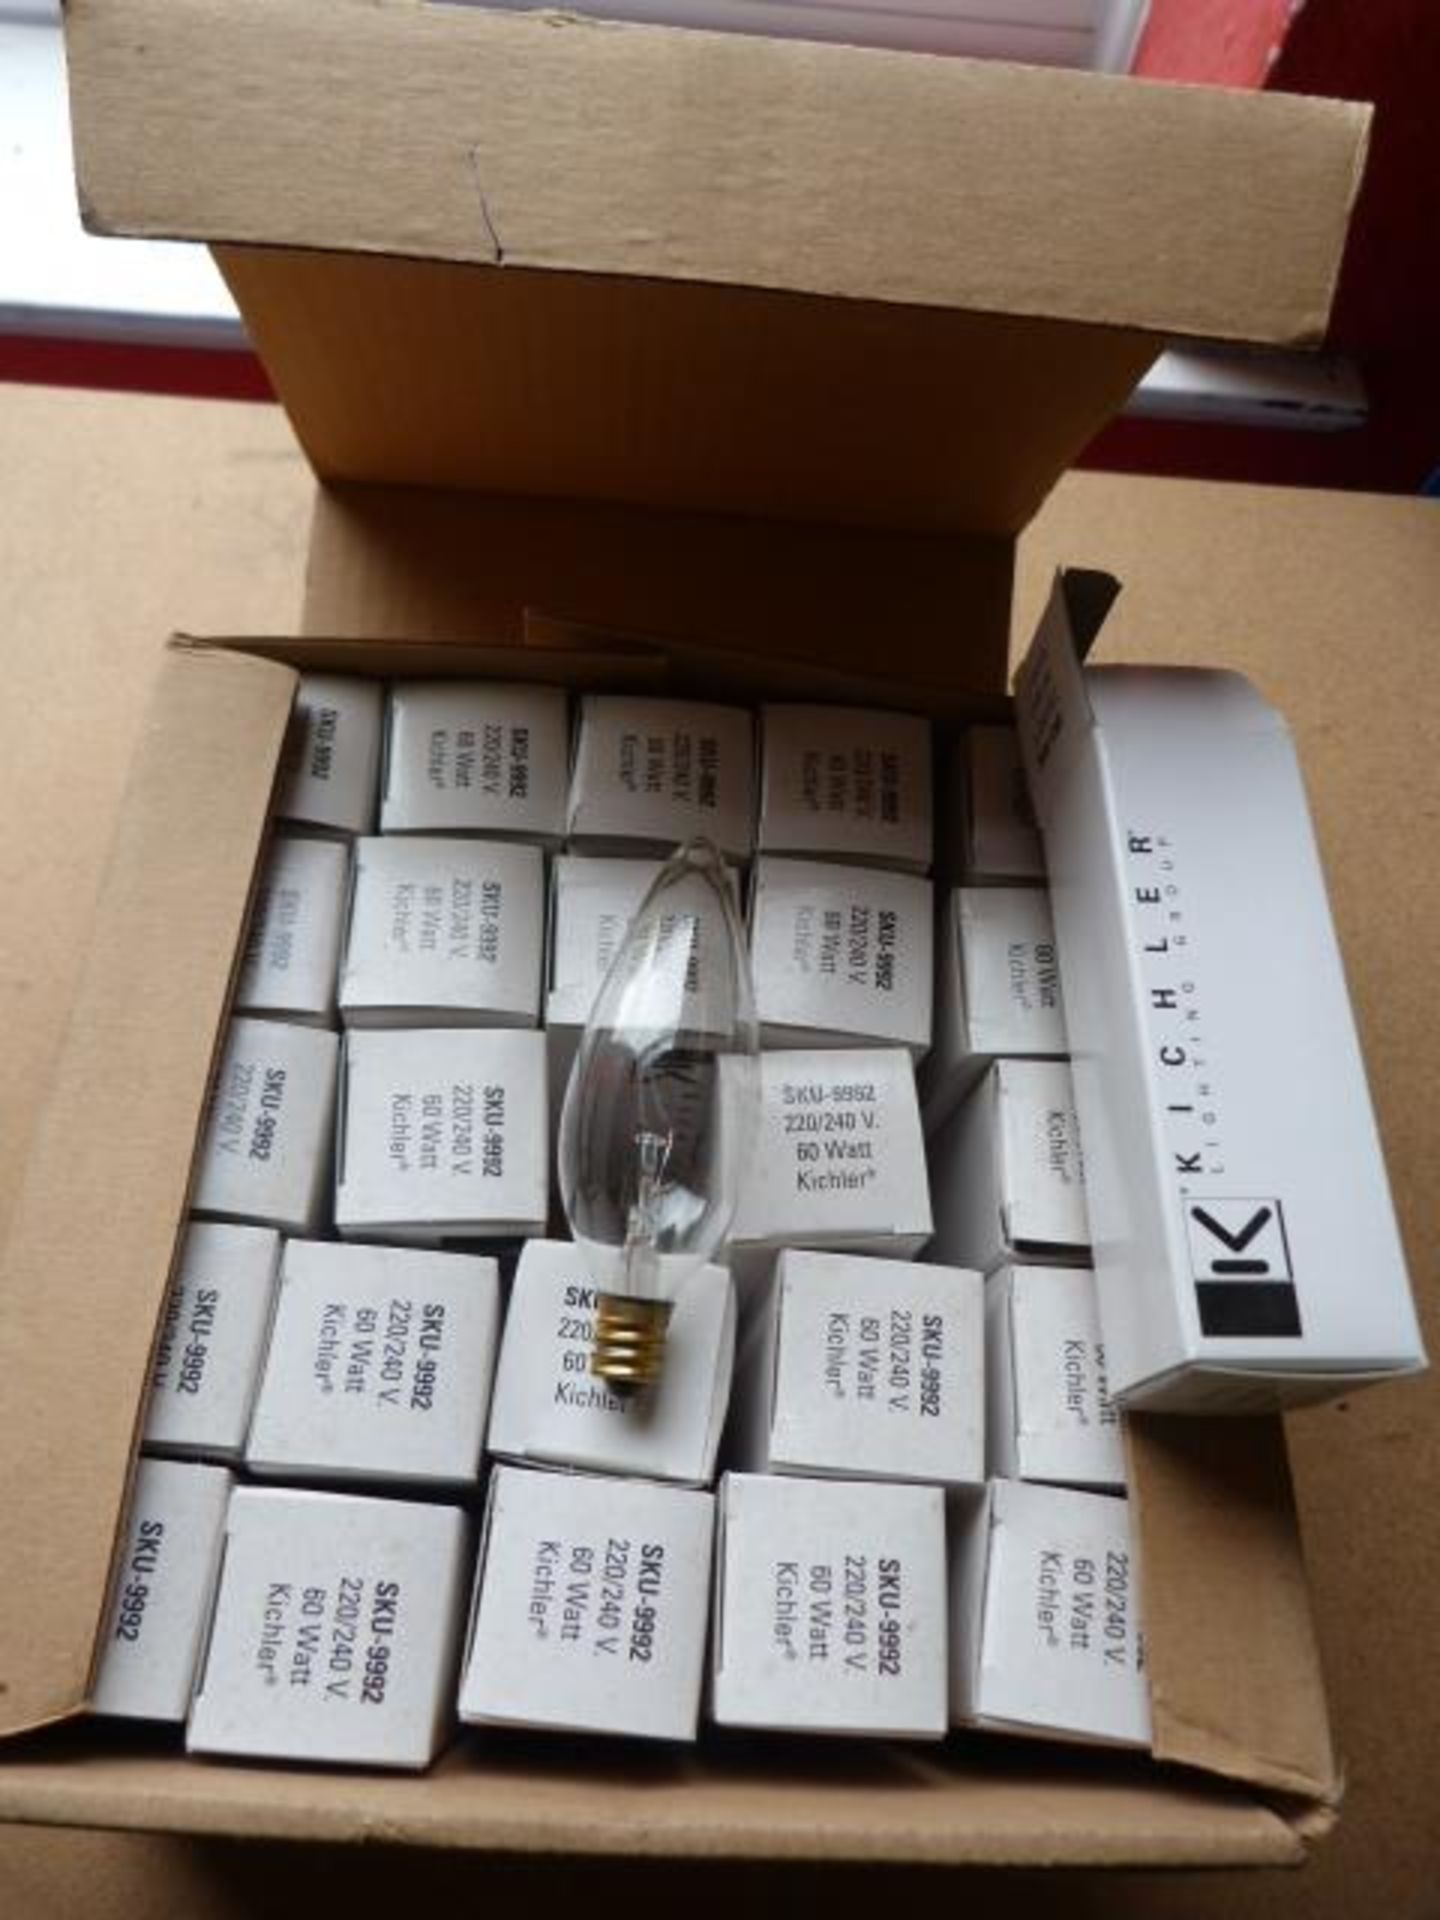 *Box of Twenty-Five SKU-9992 60w Bulbs - Image 2 of 2